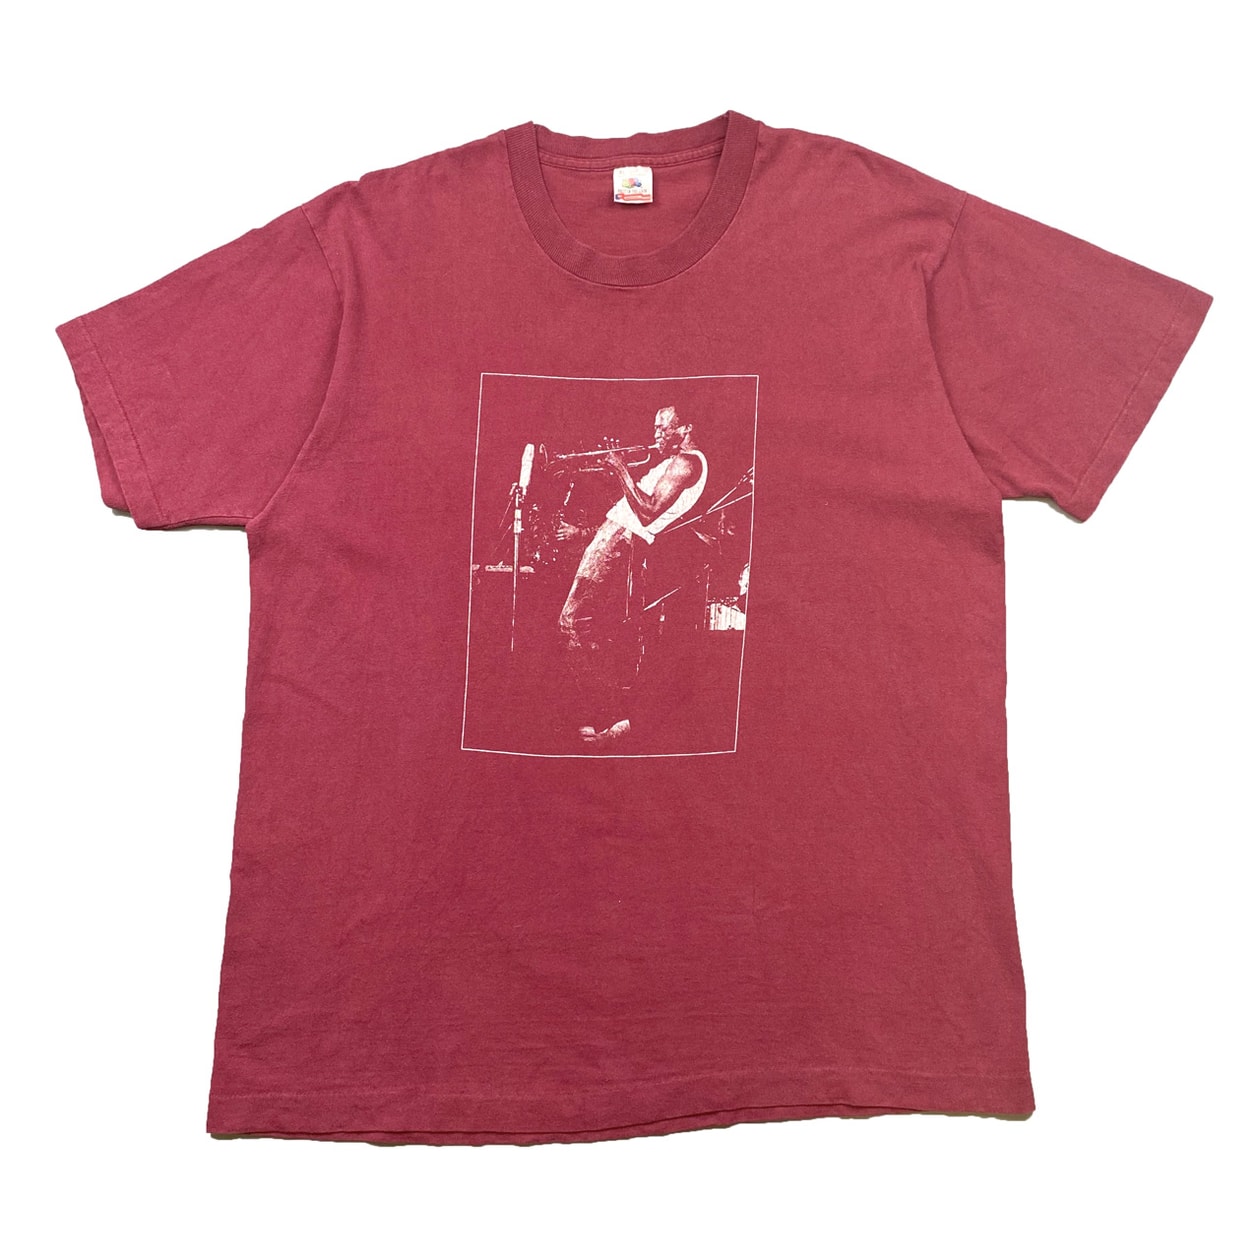 Teejerker Vintage T Shirt Release Four Year Anniversary